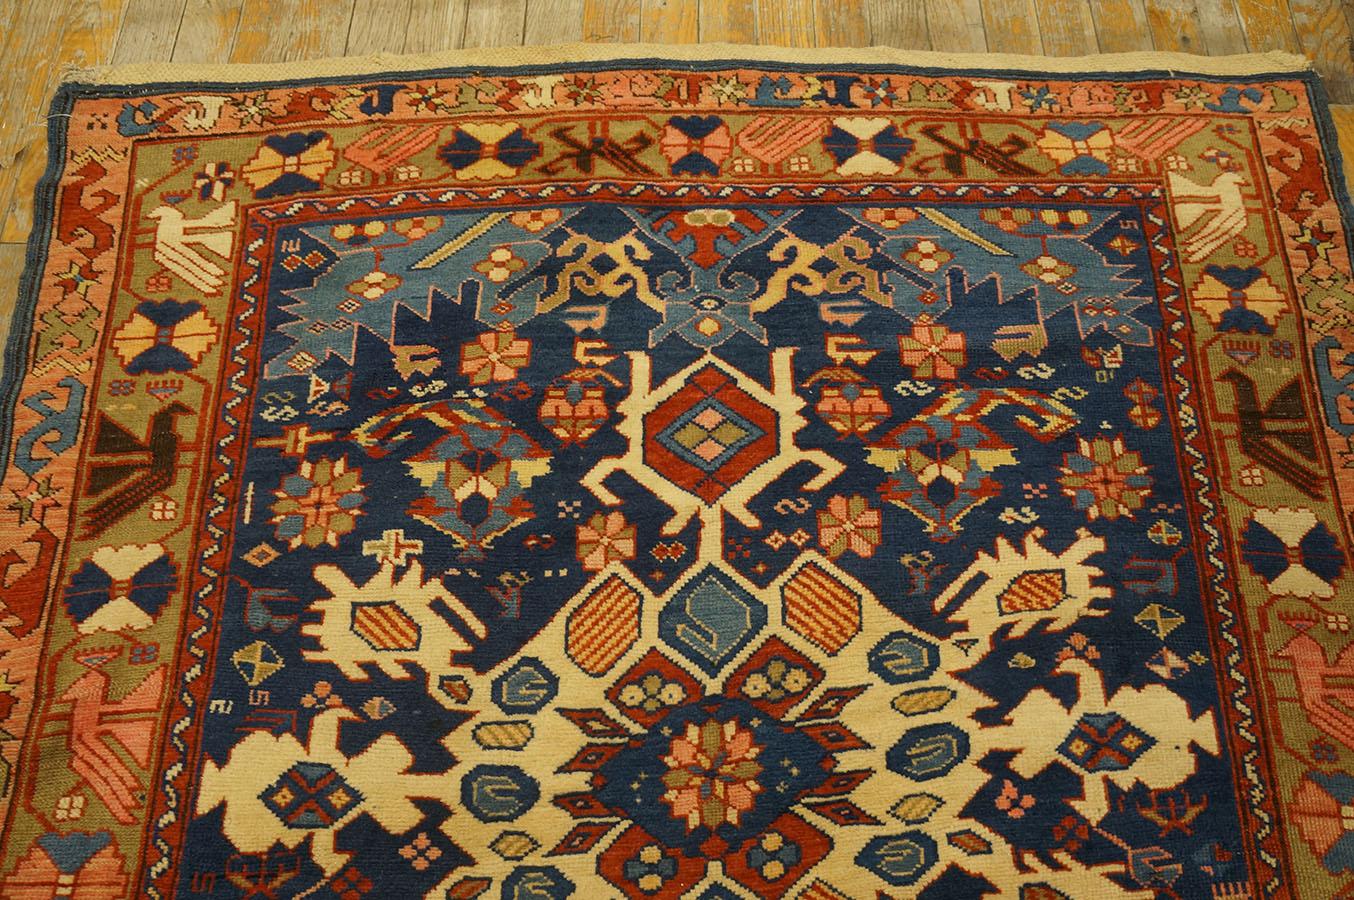 Late 19th Century Caucasian Bidjov Carpet ( 4'6'' x 5'8'' - 122 x 183 cm) For Sale 1